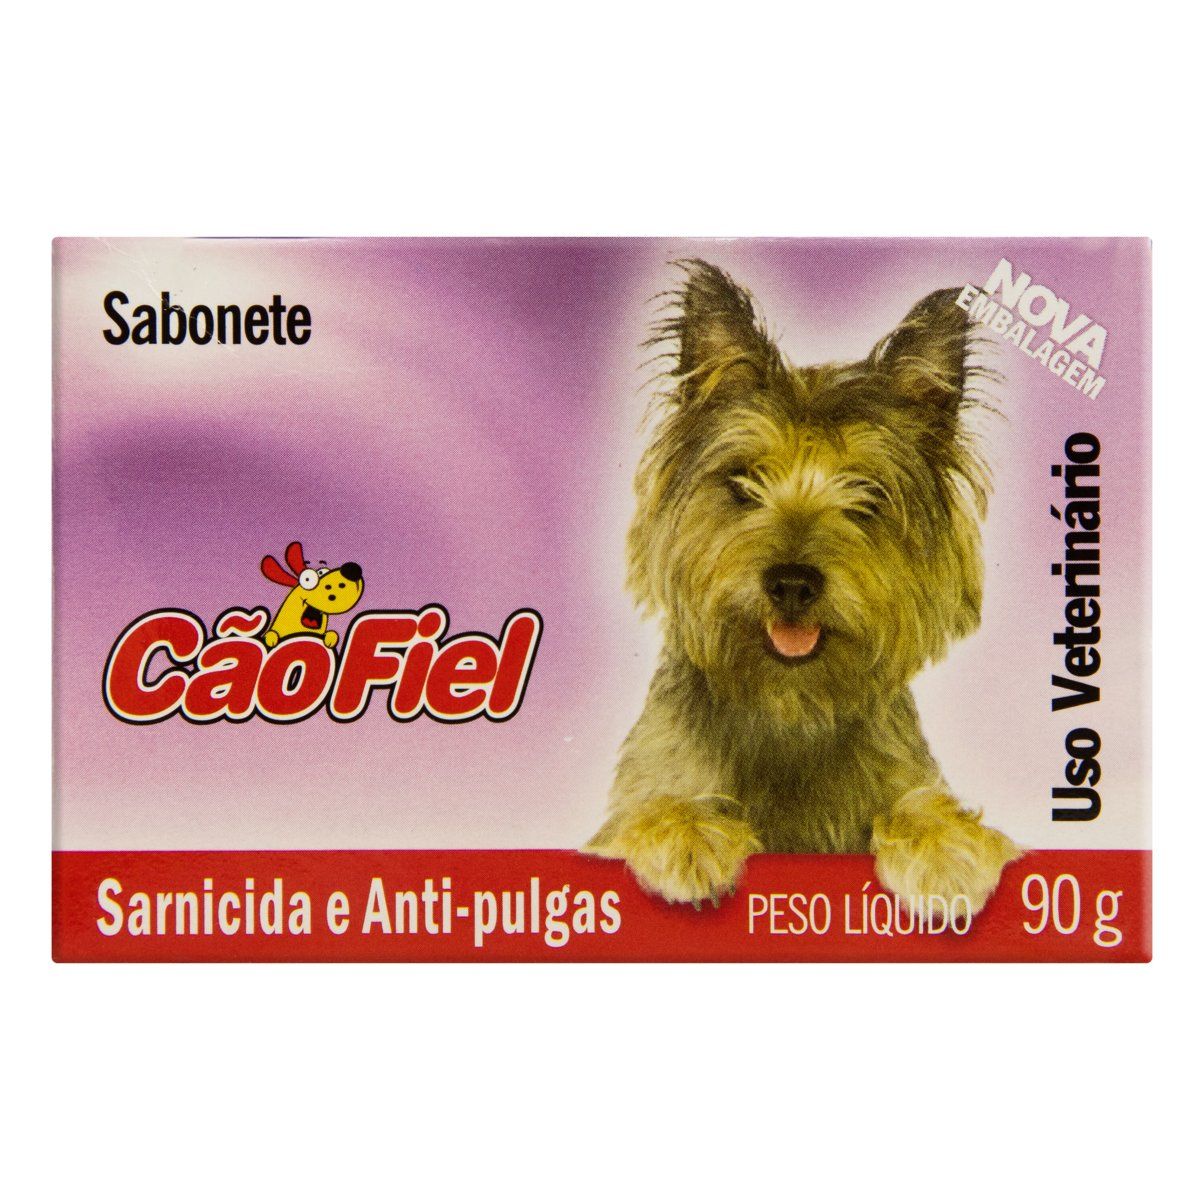 Sabonete Uso Veterinário Cão Fiel Sarnicida e Anti-Pulgas 90g